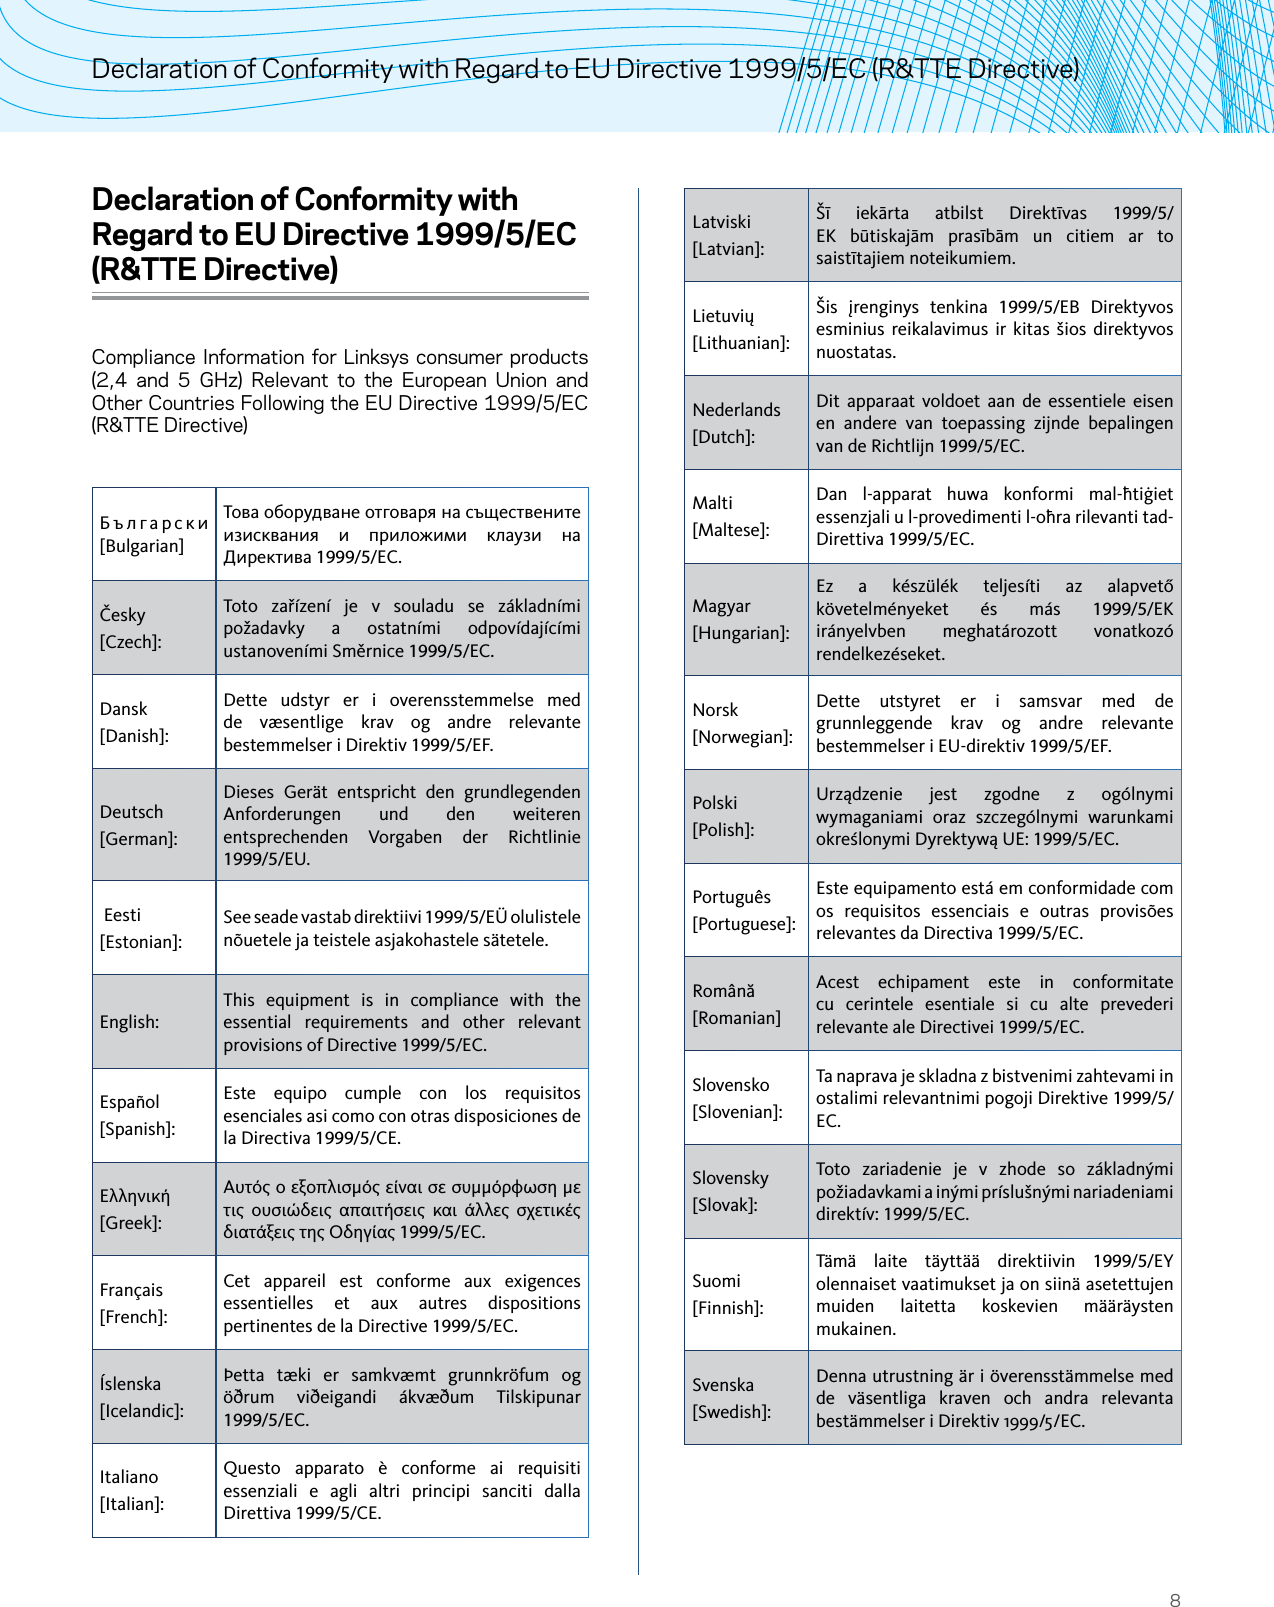 8Declaration of Conformity with Regard to EU Directive 1999/5/EC (R&amp;TTE Directive)Declaration of Conformity with Regard to EU Directive 1999/5/EC (R&amp;TTE Directive)Compliance Information for Linksys consumer products (2,4 and 5 GHz) Relevant to the European Union and Other Countries Following the EU Directive 1999/5/EC (R&amp;TTE Directive)Български [Bulgarian]Това оборудване отговаря на съществените изисквания и приложими клаузи на Директива 1999/5/ЕС.Česky [Czech]:Toto zařízení je v souladu se základními požadavky a ostatními odpovídajícími ustanoveními Směrnice 1999/5/EC.Dansk [Danish]:Dette udstyr er i overensstemmelse med de væsentlige krav og andre relevante bestemmelser i Direktiv 1999/5/EF.Deutsch [German]:Dieses Gerät entspricht den grundlegenden Anforderungen und den weiteren entsprechenden Vorgaben der Richtlinie 1999/5/EU. Eesti [Estonian]:See seade vastab direktiivi 1999/5/EÜ olulistele nõuetele ja teistele asjakohastele sätetele.English:This equipment is in compliance with the essential requirements and other relevant provisions of Directive 1999/5/EC.Español [Spanish]:Este equipo cumple con los requisitos esenciales asi como con otras disposiciones de la Directiva 1999/5/CE.Ελληνική [Greek]:Αυτός ο εξοπλισµός είναι σε συµµόρφωση µε τις ουσιώδεις απαιτήσεις και άλλες σχετικές διατάξεις της Οδηγίας 1999/5/EC.Français [French]:Cet appareil est conforme aux exigences essentielles et aux autres dispositions pertinentes de la Directive 1999/5/EC.Íslenska [Icelandic]:Þetta tæki er samkvæmt grunnkröfum og öðrum viðeigandi ákvæðum Tilskipunar 1999/5/EC.Italiano [Italian]:Questo apparato è conforme ai requisiti essenziali e agli altri principi sanciti dalla Direttiva 1999/5/CE.Latviski [Latvian]:Šī iekārta atbilst Direktīvas 1999/5/EK būtiskajām prasībām un citiem ar to saistītajiem noteikumiem.Lietuvių [Lithuanian]:Šis įrenginys tenkina 1999/5/EB Direktyvos esminius reikalavimus ir kitas šios direktyvos nuostatas.Nederlands[Dutch]:Dit apparaat voldoet aan de essentiele eisen en andere van toepassing zijnde bepalingen van de Richtlijn 1999/5/EC.Malti [Maltese]:Dan l-apparat huwa konformi mal-ħtiġiet essenzjali u l-provedimenti l-oħra rilevanti tad-Direttiva 1999/5/EC.Magyar[Hungarian]:Ez a készülék teljesíti az alapvető követelményeket és más 1999/5/EK irányelvben meghatározott vonatkozó rendelkezéseket.Norsk[Norwegian]:Dette utstyret er i samsvar med de grunnleggende krav og andre relevante bestemmelser i EU-direktiv 1999/5/EF.Polski [Polish]:Urządzenie jest zgodne z ogólnymi wymaganiami oraz szczególnymi warunkami określonymi Dyrektywą UE: 1999/5/EC.Português [Portuguese]:Este equipamento está em conformidade com os requisitos essenciais e outras provisões relevantes da Directiva 1999/5/EC.Română [Romanian]Acest echipament este in conformitate cu cerintele esentiale si cu alte prevederi relevante ale Directivei 1999/5/EC.Slovensko [Slovenian]:Ta naprava je skladna z bistvenimi zahtevami in ostalimi relevantnimi pogoji Direktive 1999/5/EC.Slovensky [Slovak]:Toto zariadenie je v zhode so základnými požiadavkami a inými príslušnými nariadeniami direktív: 1999/5/EC. Suomi [Finnish]:Tämä laite täyttää direktiivin 1999/5/EY olennaiset vaatimukset ja on siinä asetettujen muiden laitetta koskevien määräysten mukainen.Svenska [Swedish]:Denna utrustning är i överensstämmelse med de väsentliga kraven och andra relevanta bestämmelser i Direktiv 1999/5/EC.